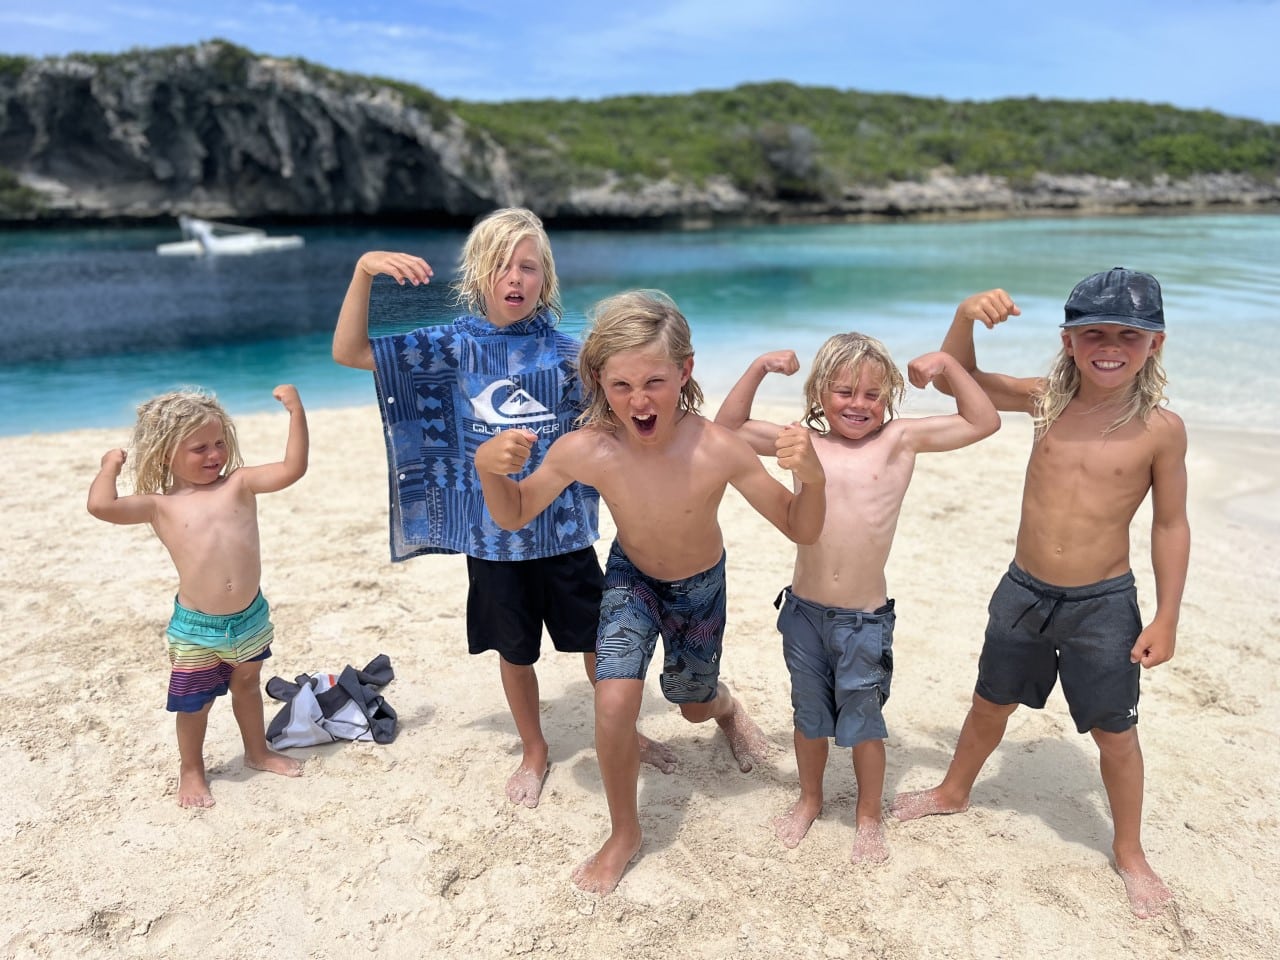 Chasing Zorba Boys on an Island